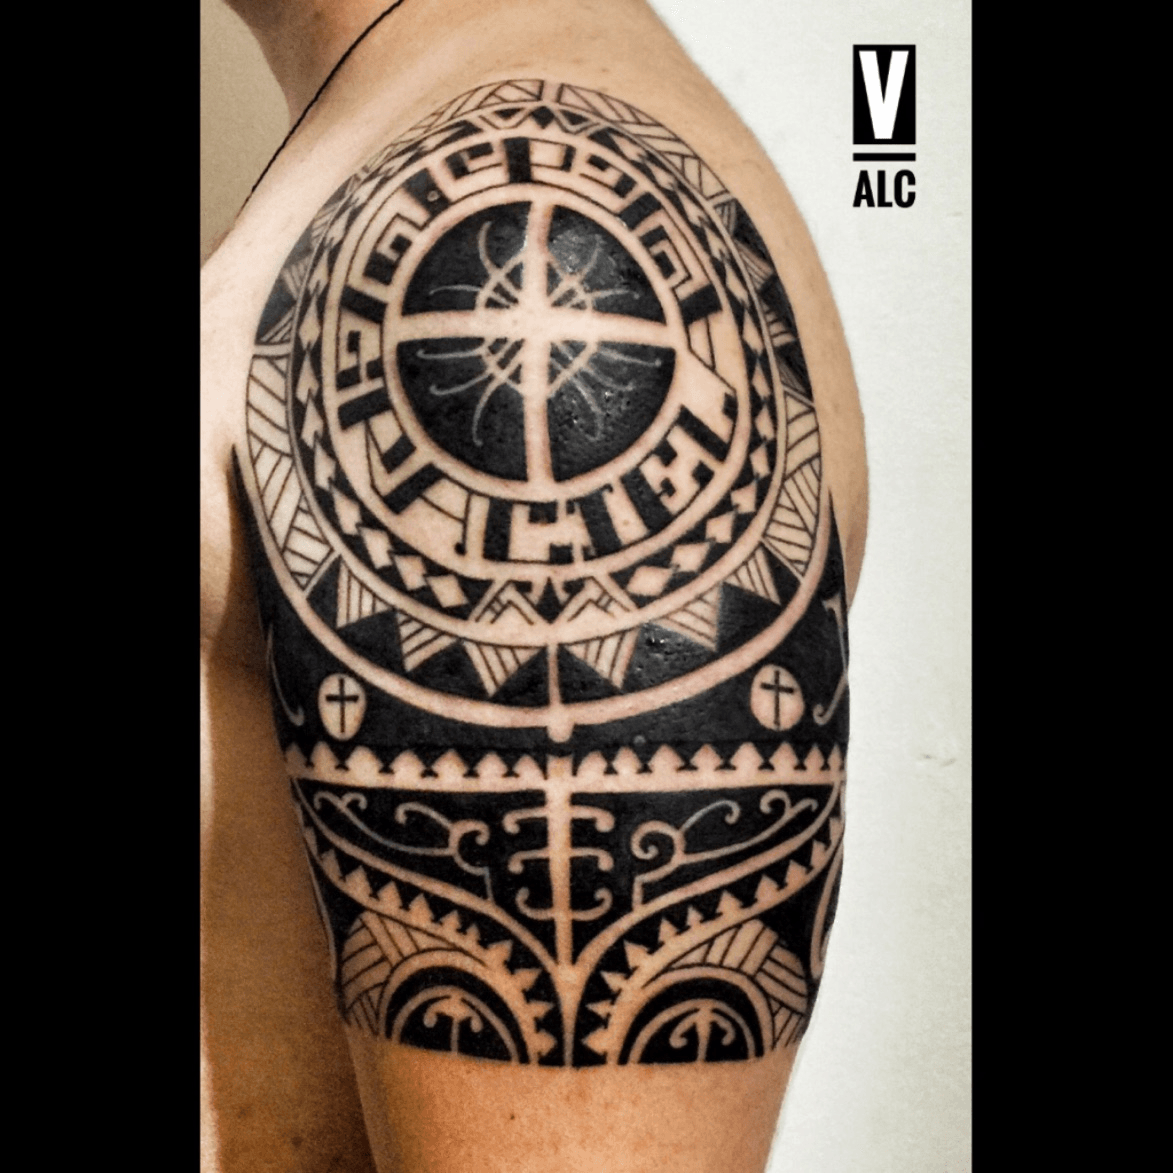 colombian muisca tribe tattoo by diegomicolta317 on DeviantArt